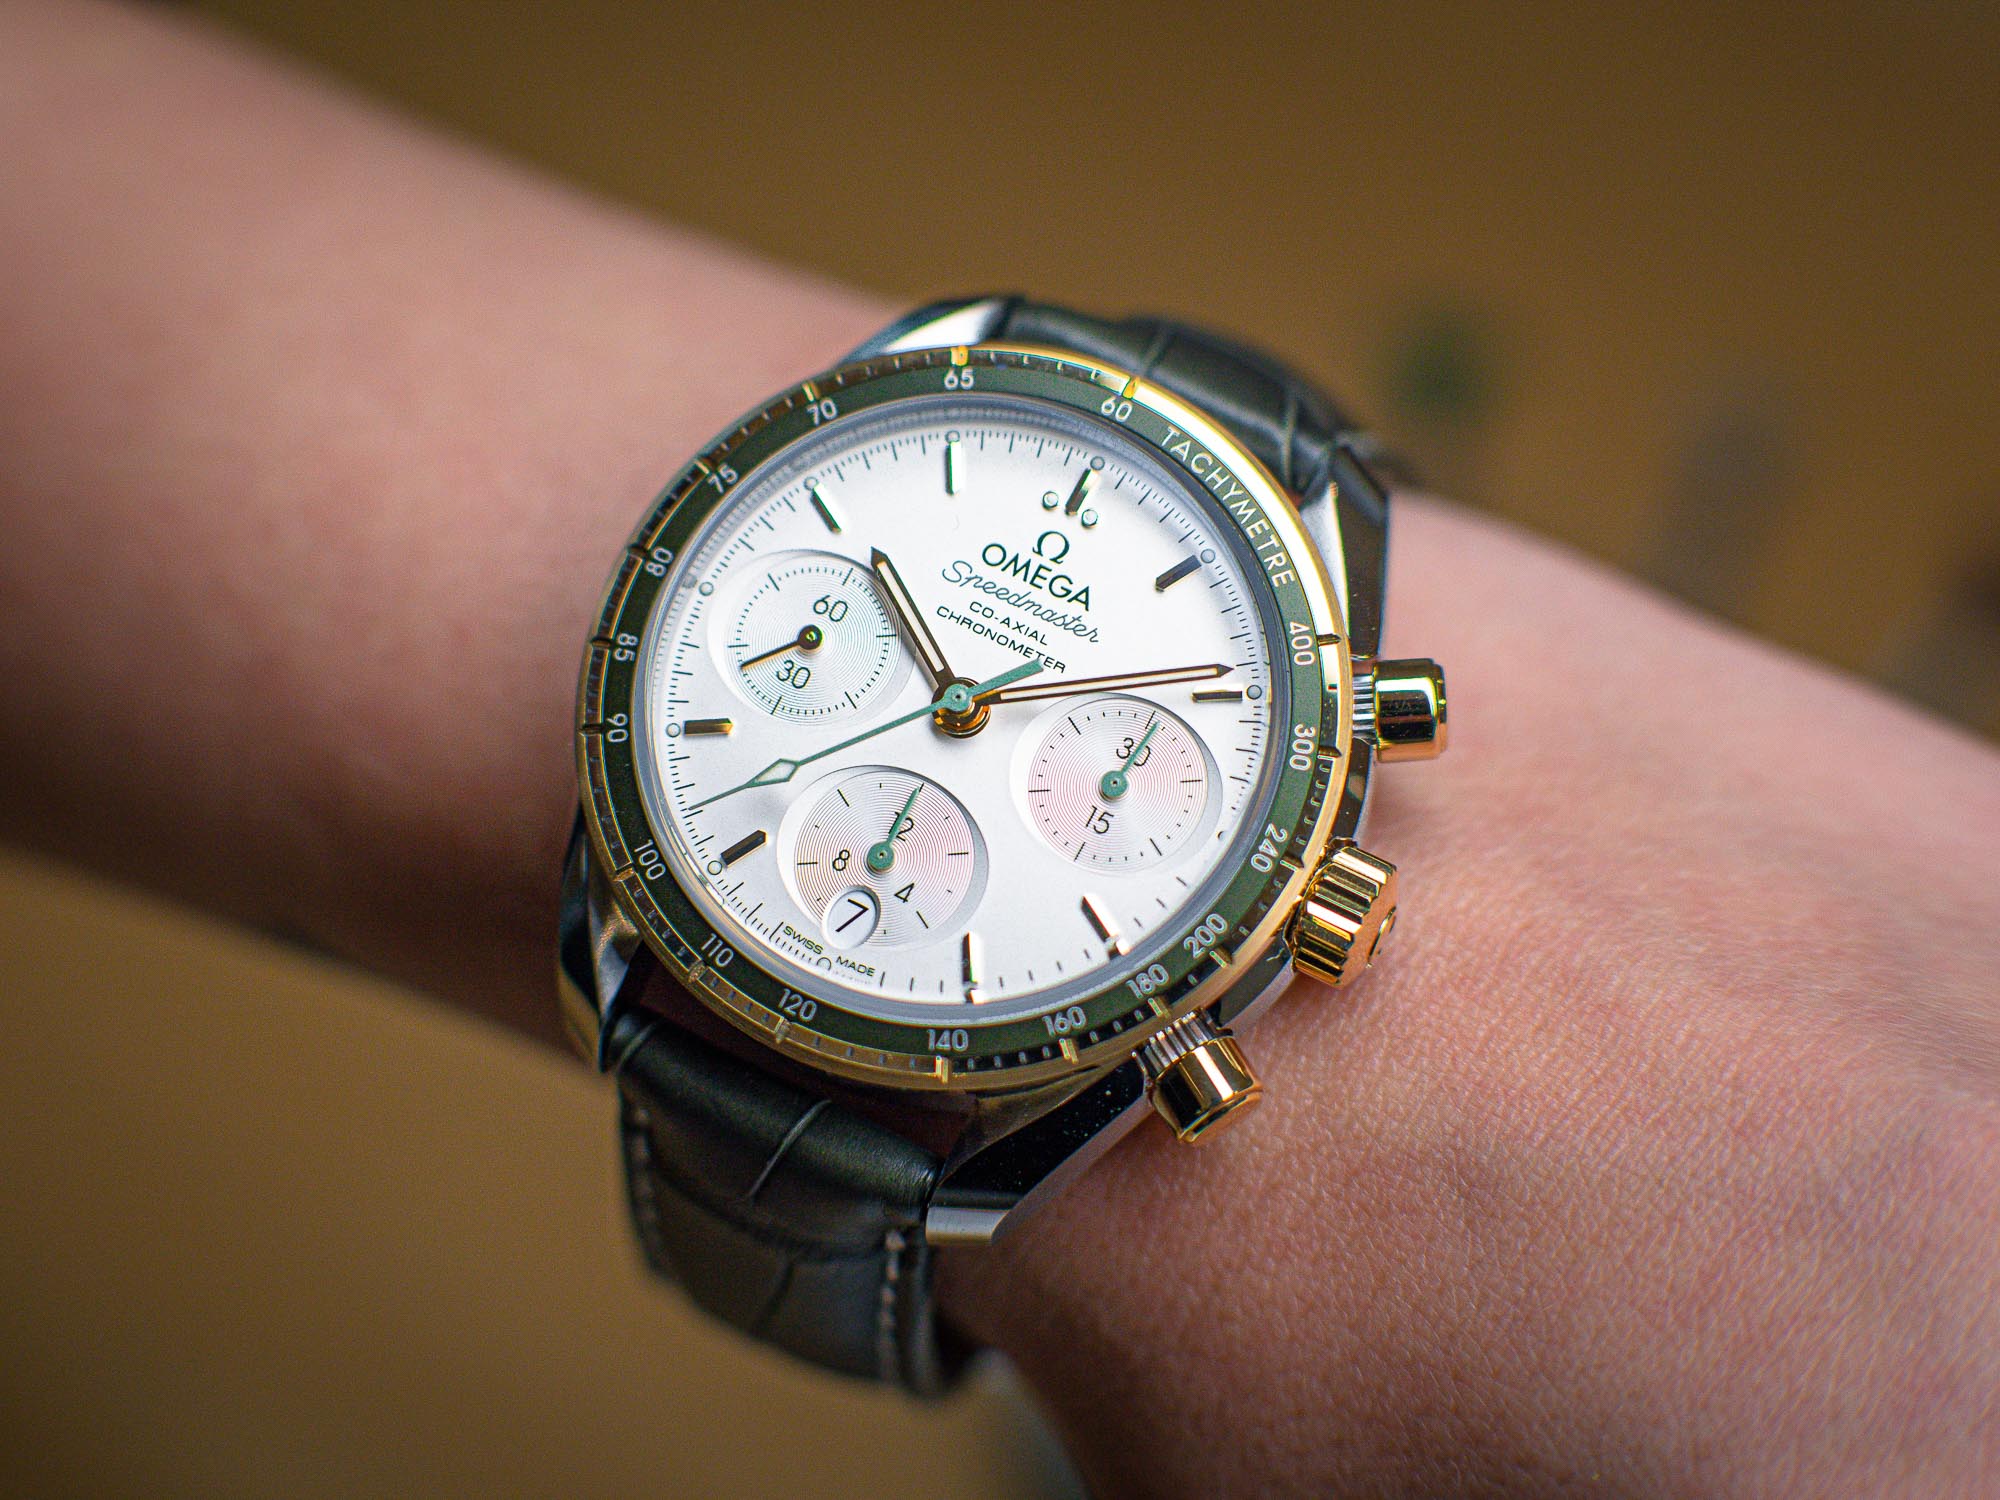 omega speedmaster women's watch